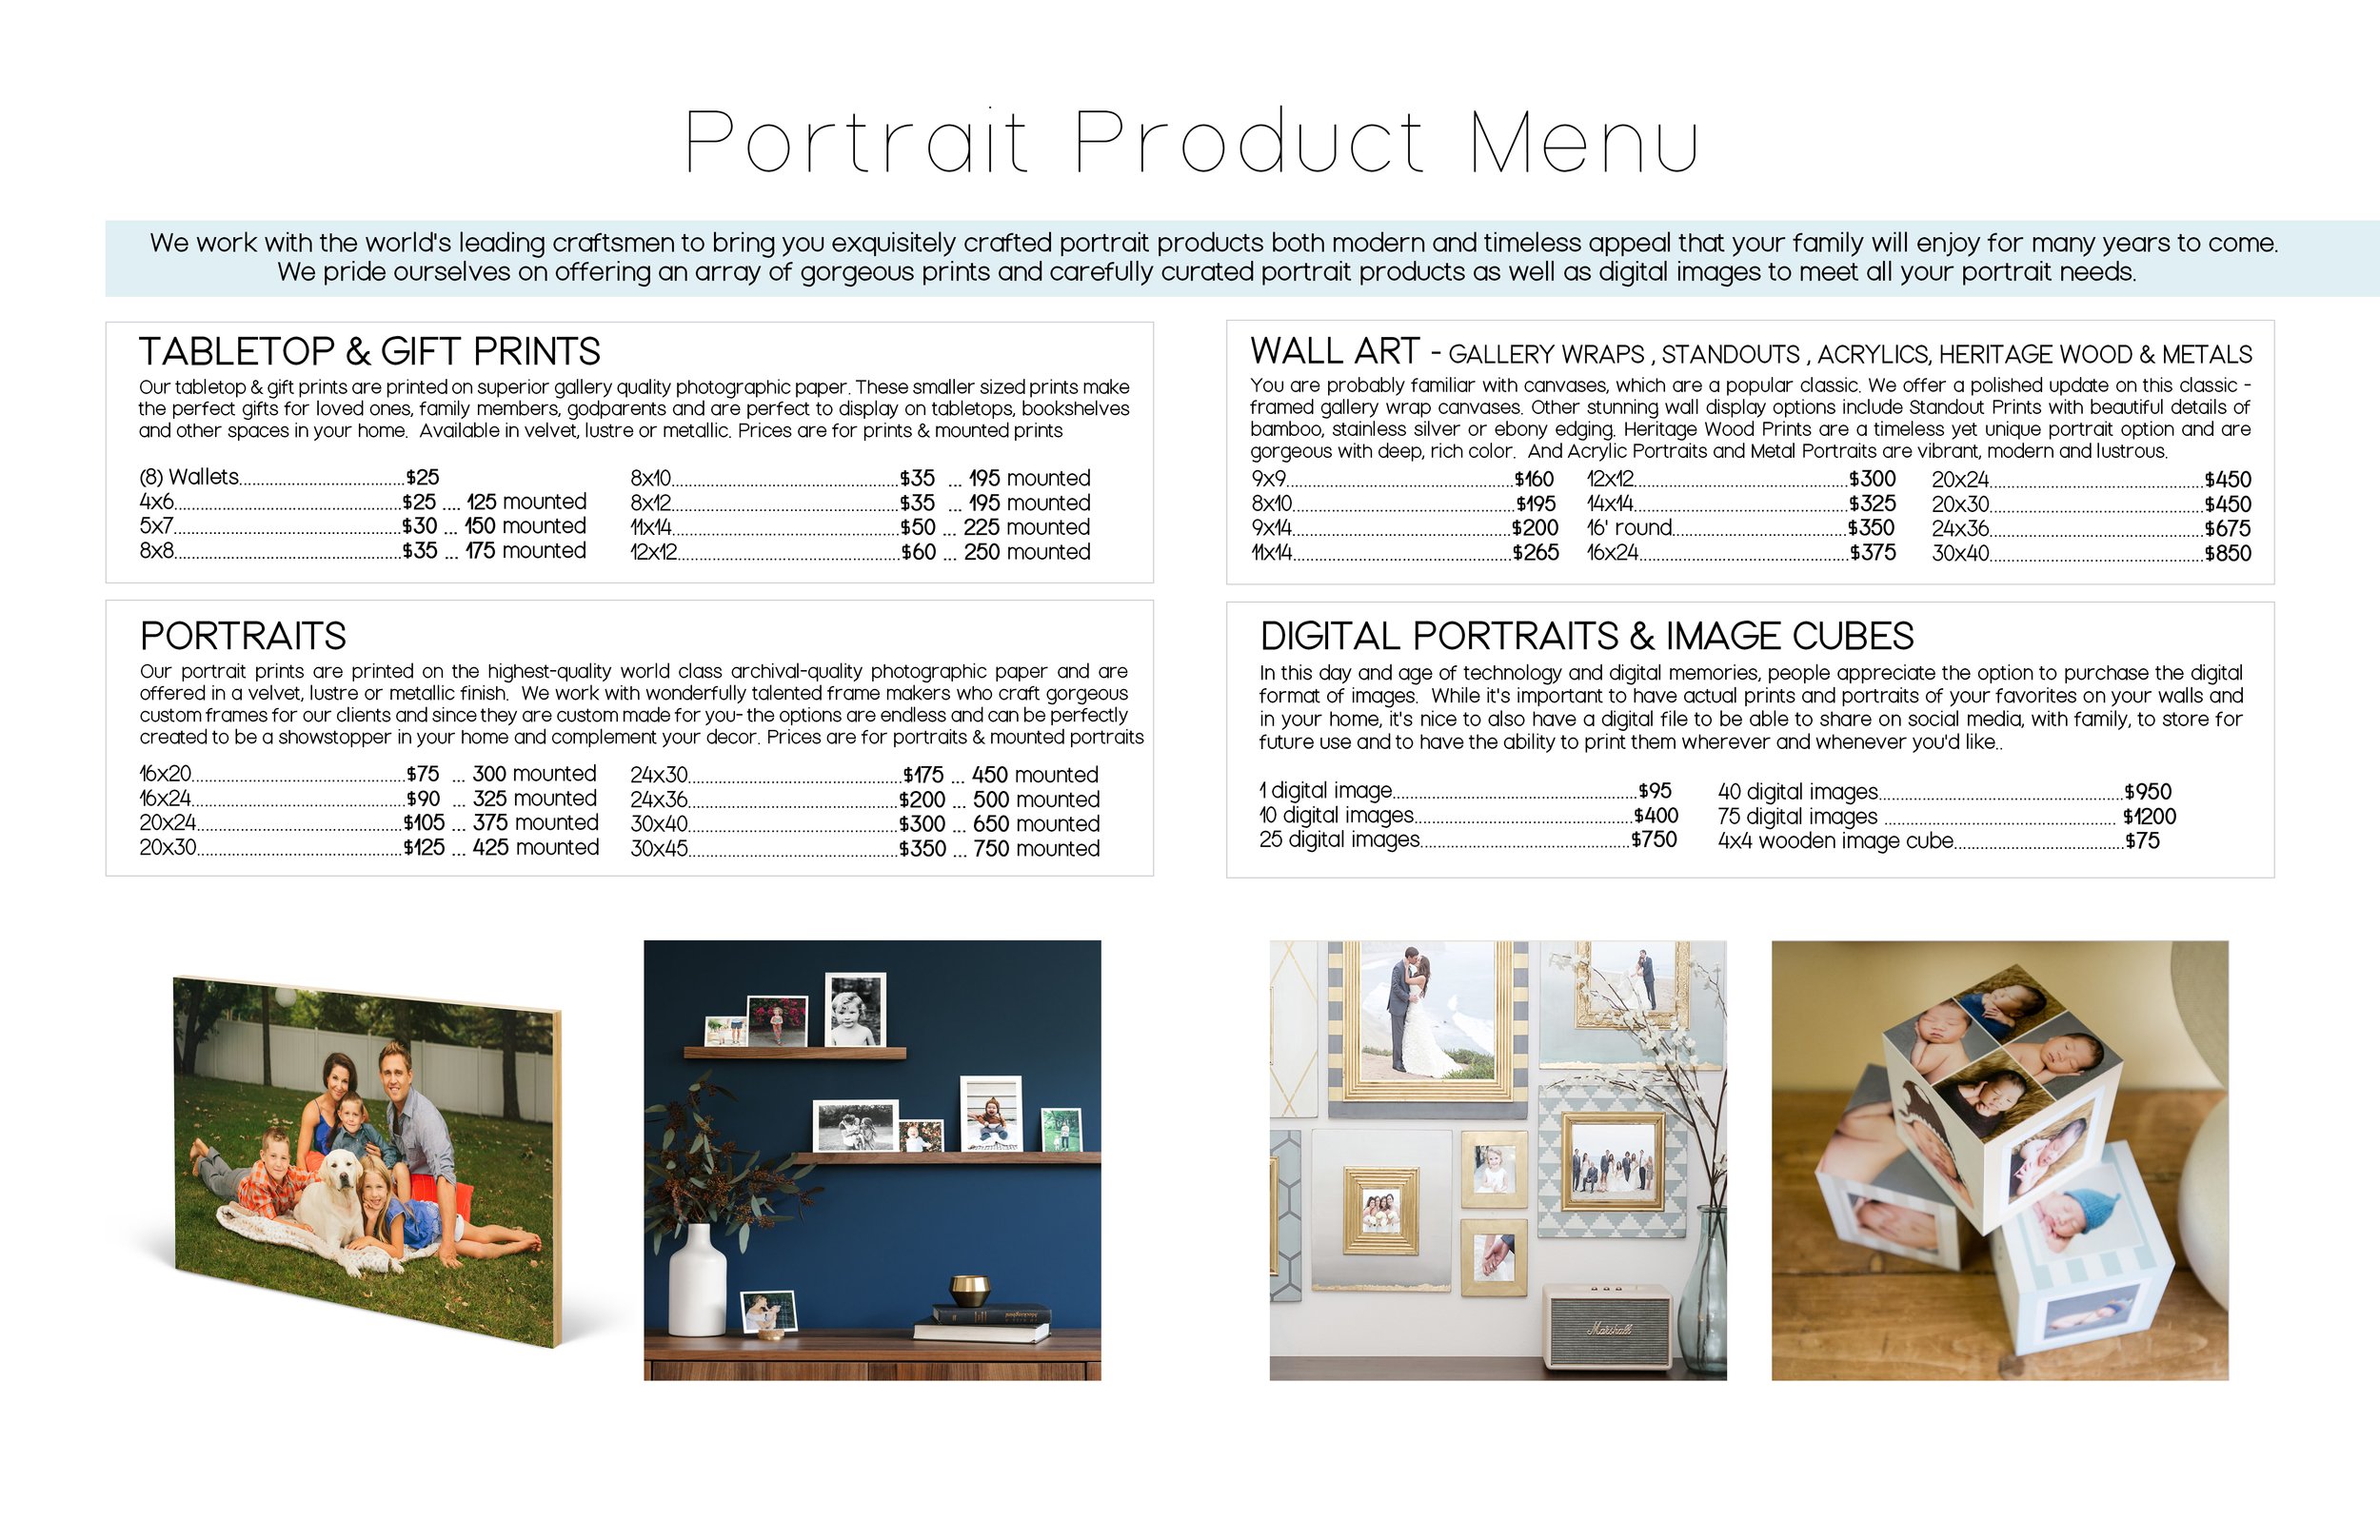 Portrait Product Menu Magazine Pgs.jpg